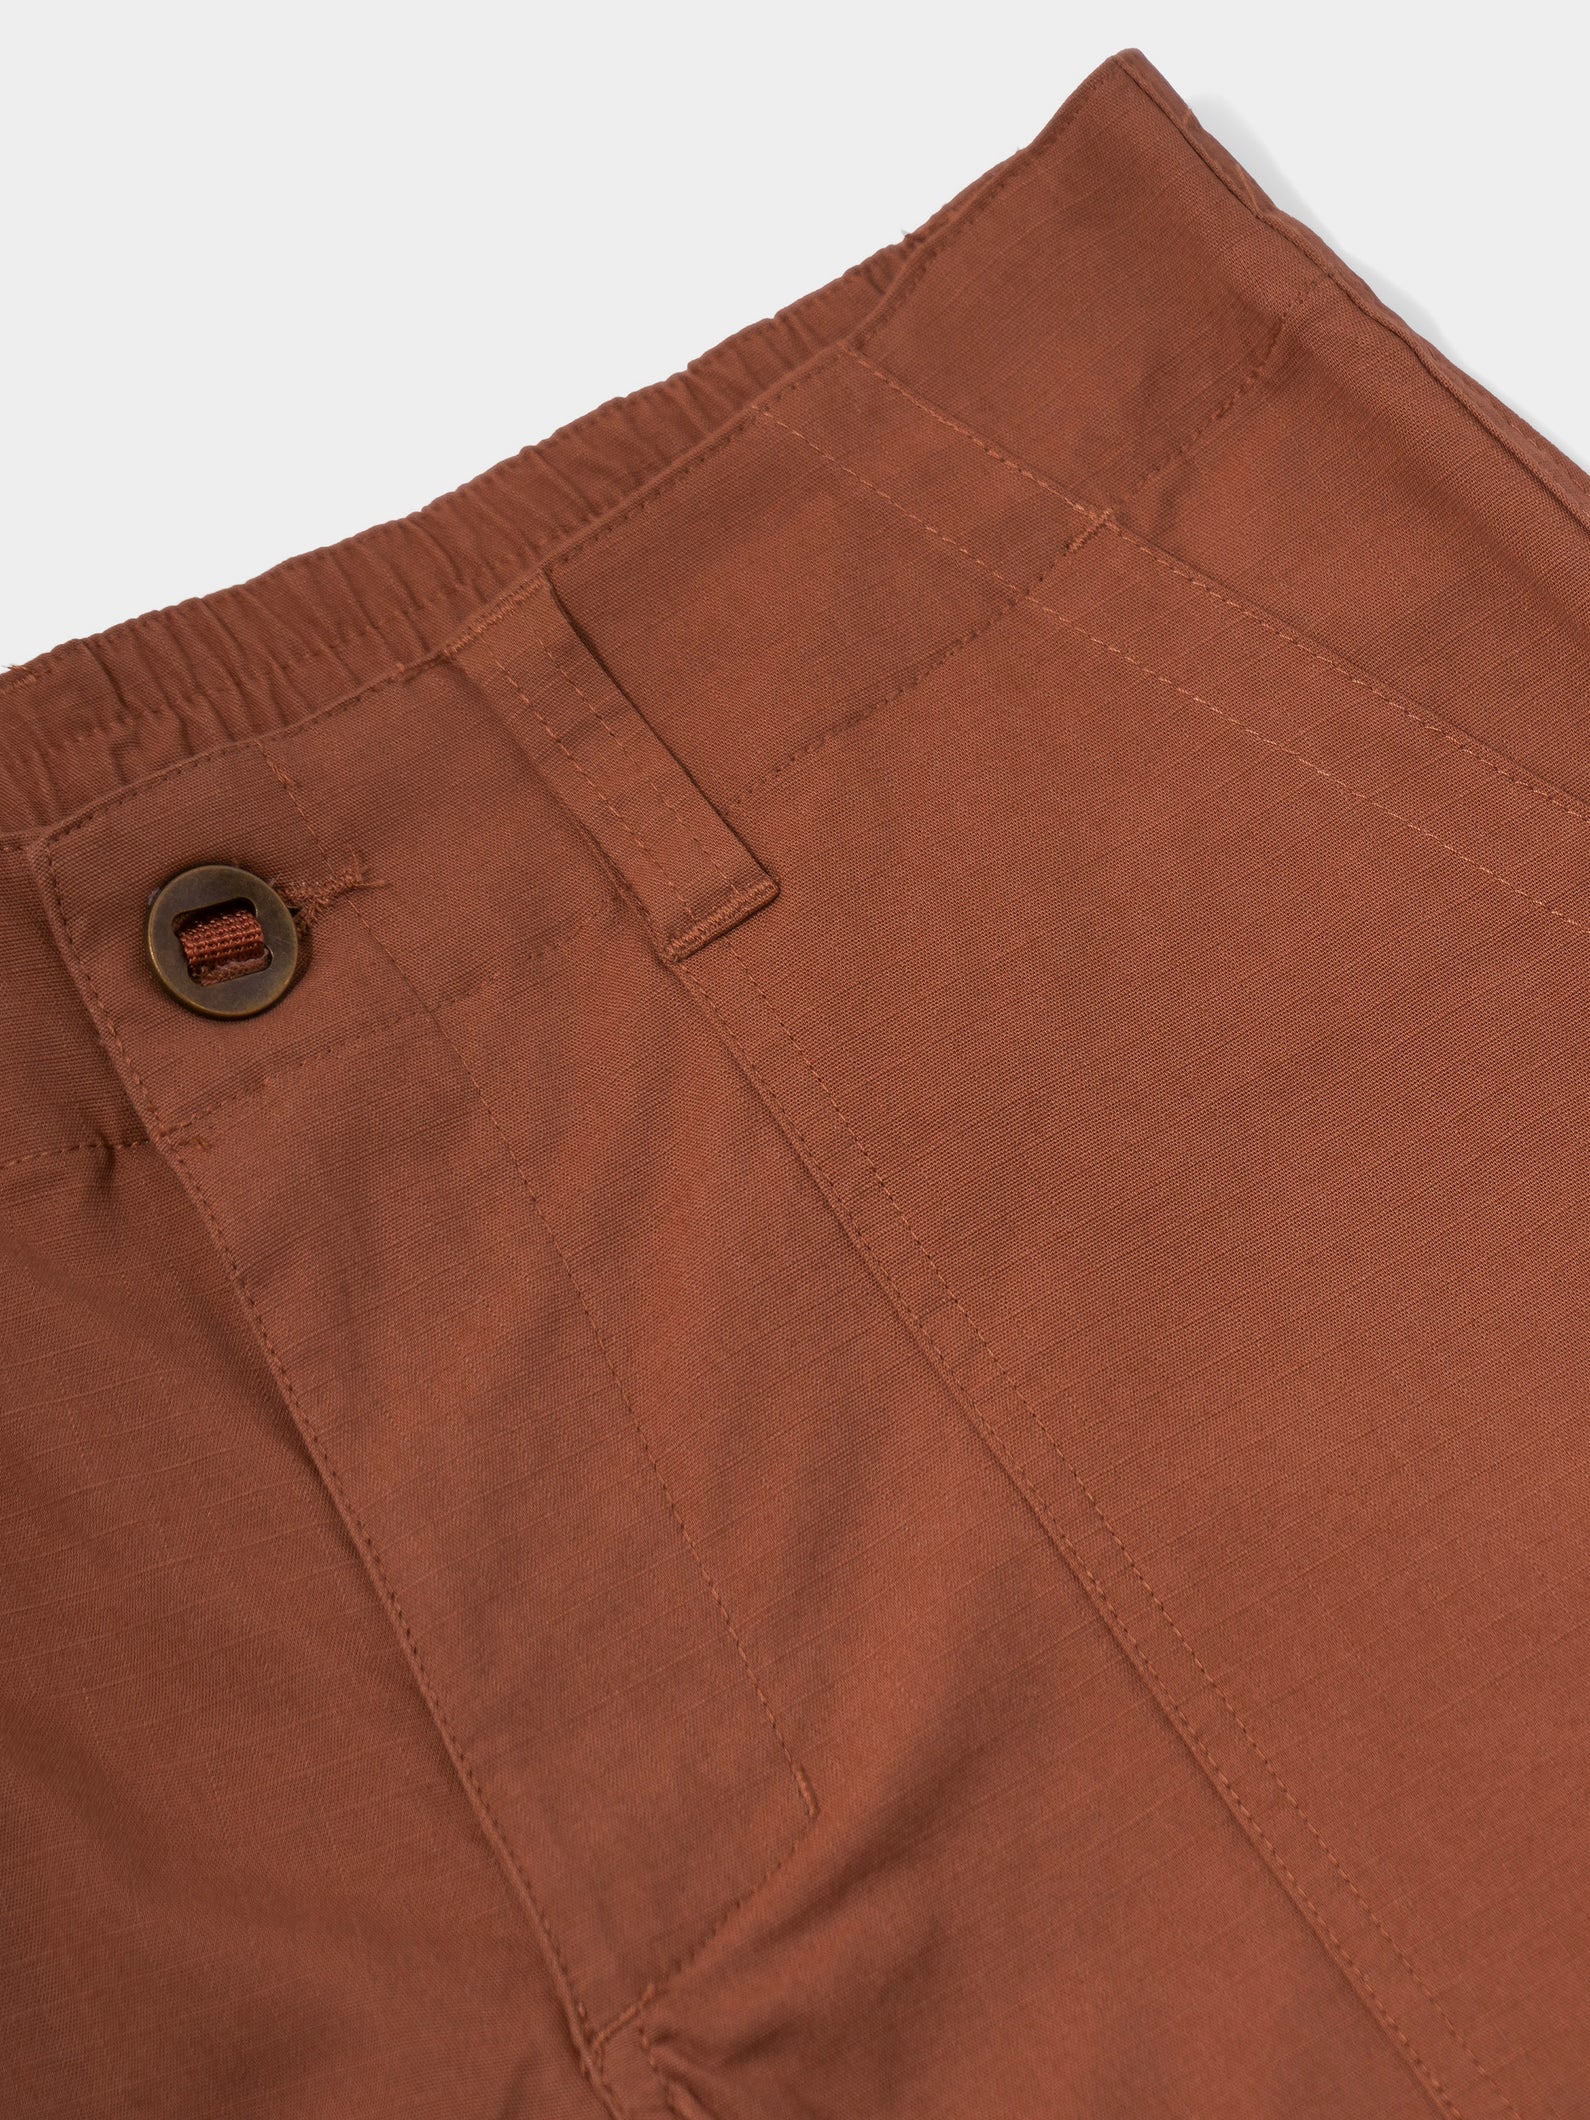 Women's Gruene Pants - Pintail Brown